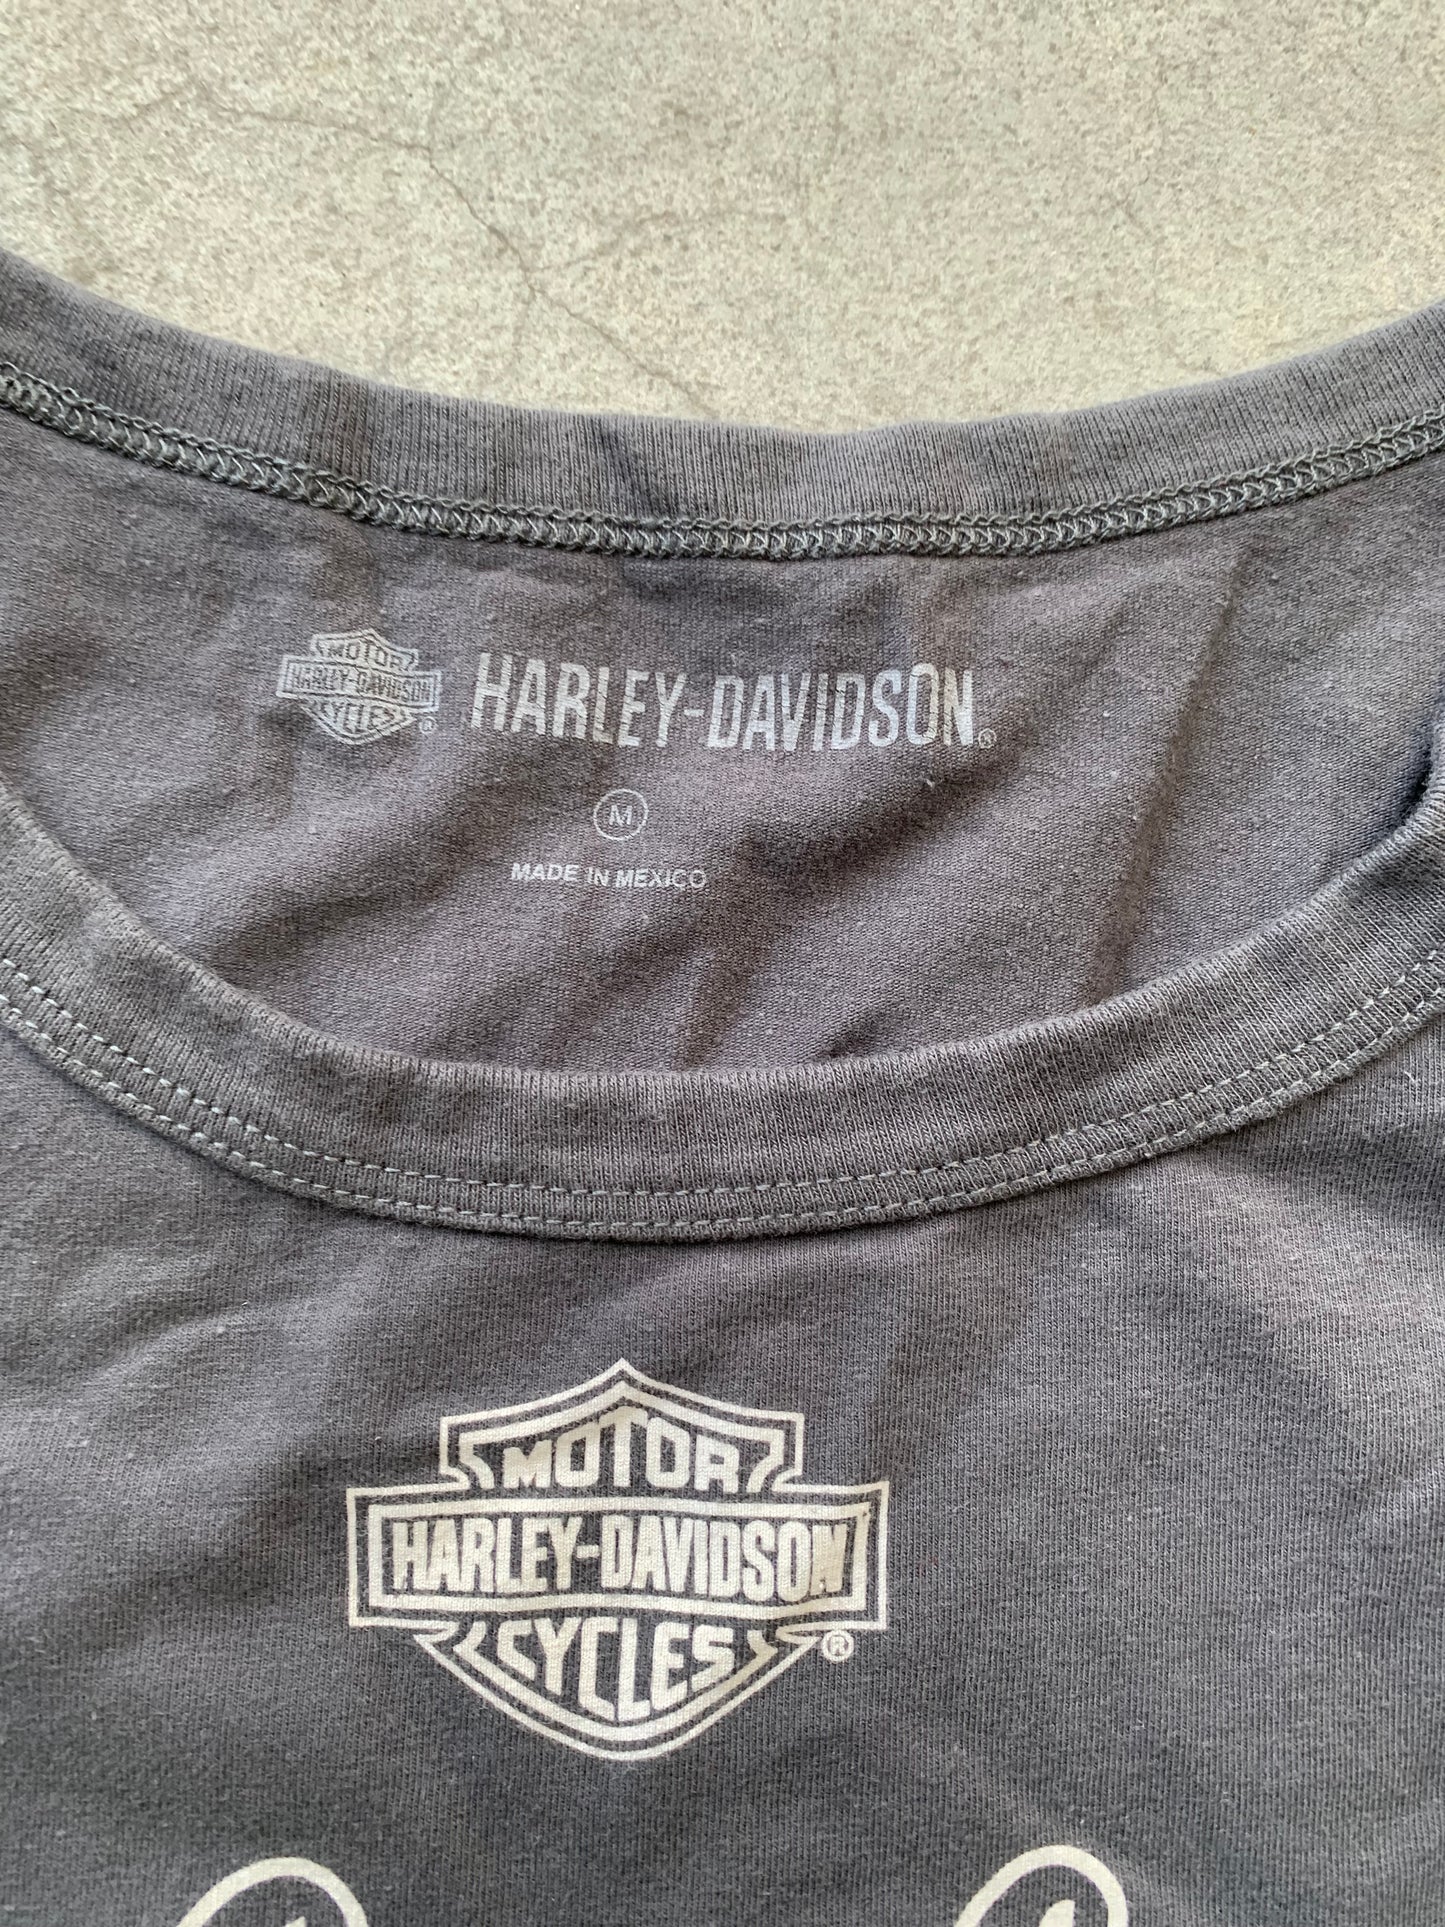 (M) Harley Davidson Bad Choices Womens Tank